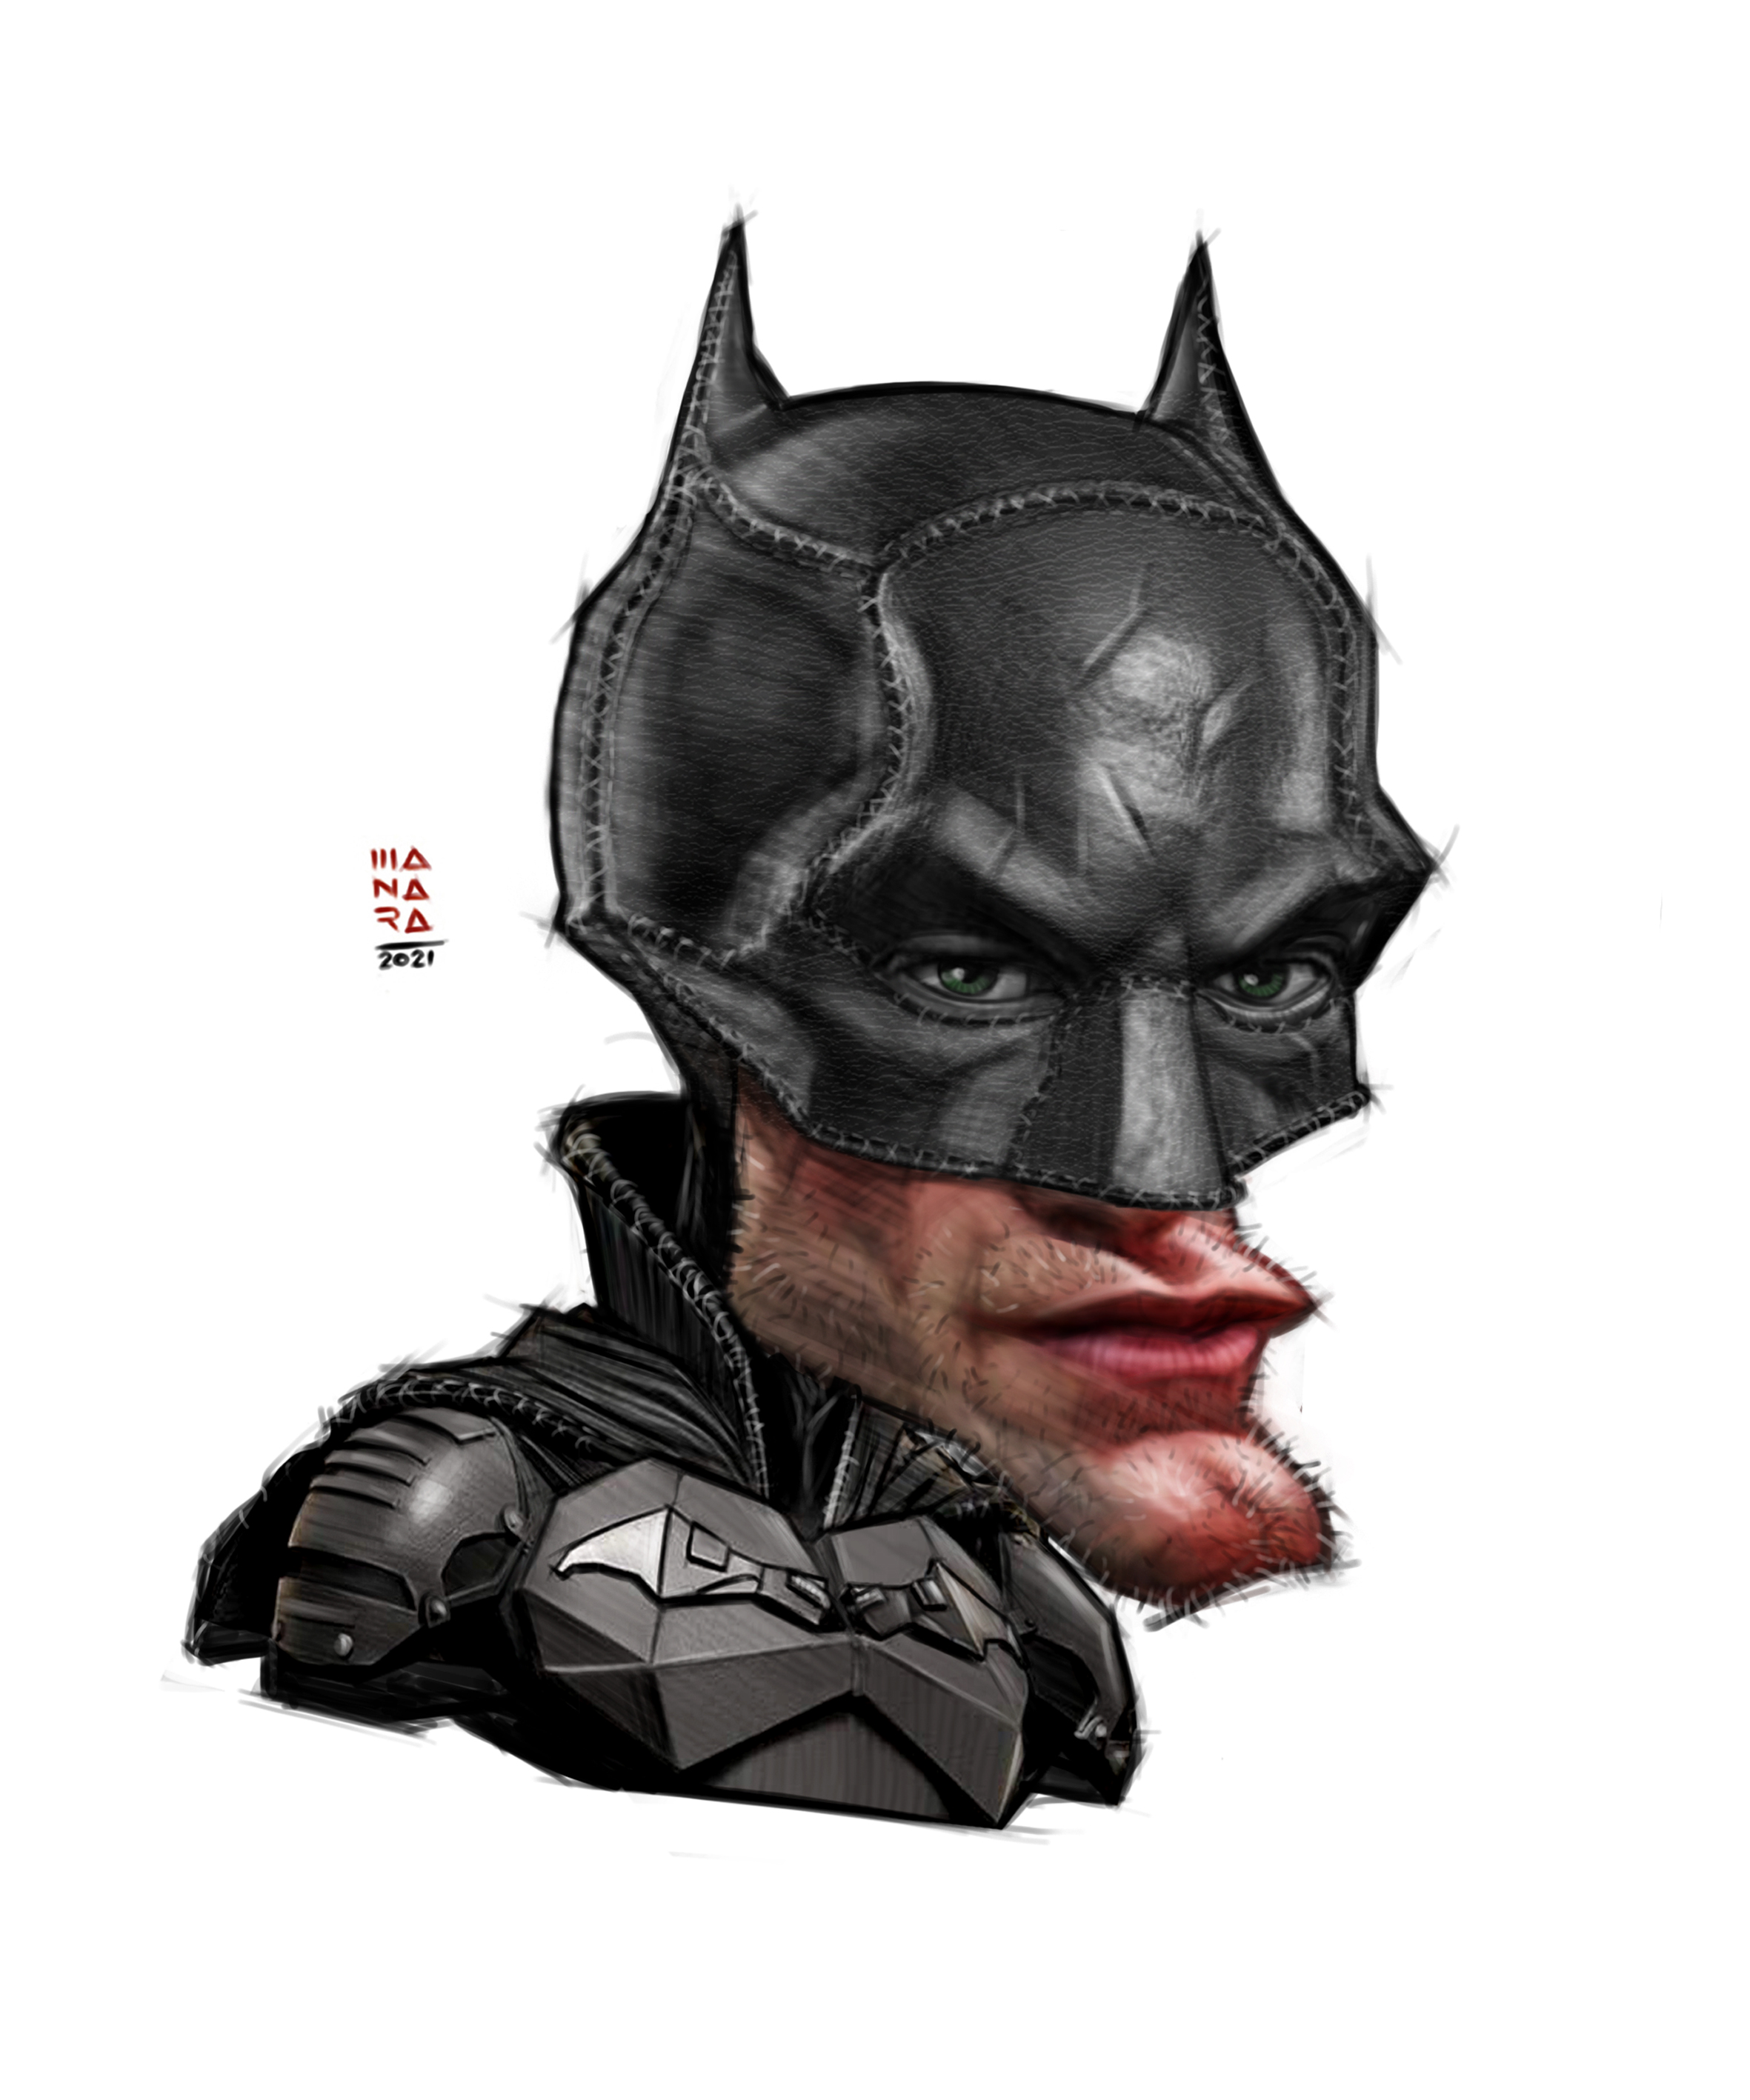 Caricatura do Batman by jeanmanara on DeviantArt